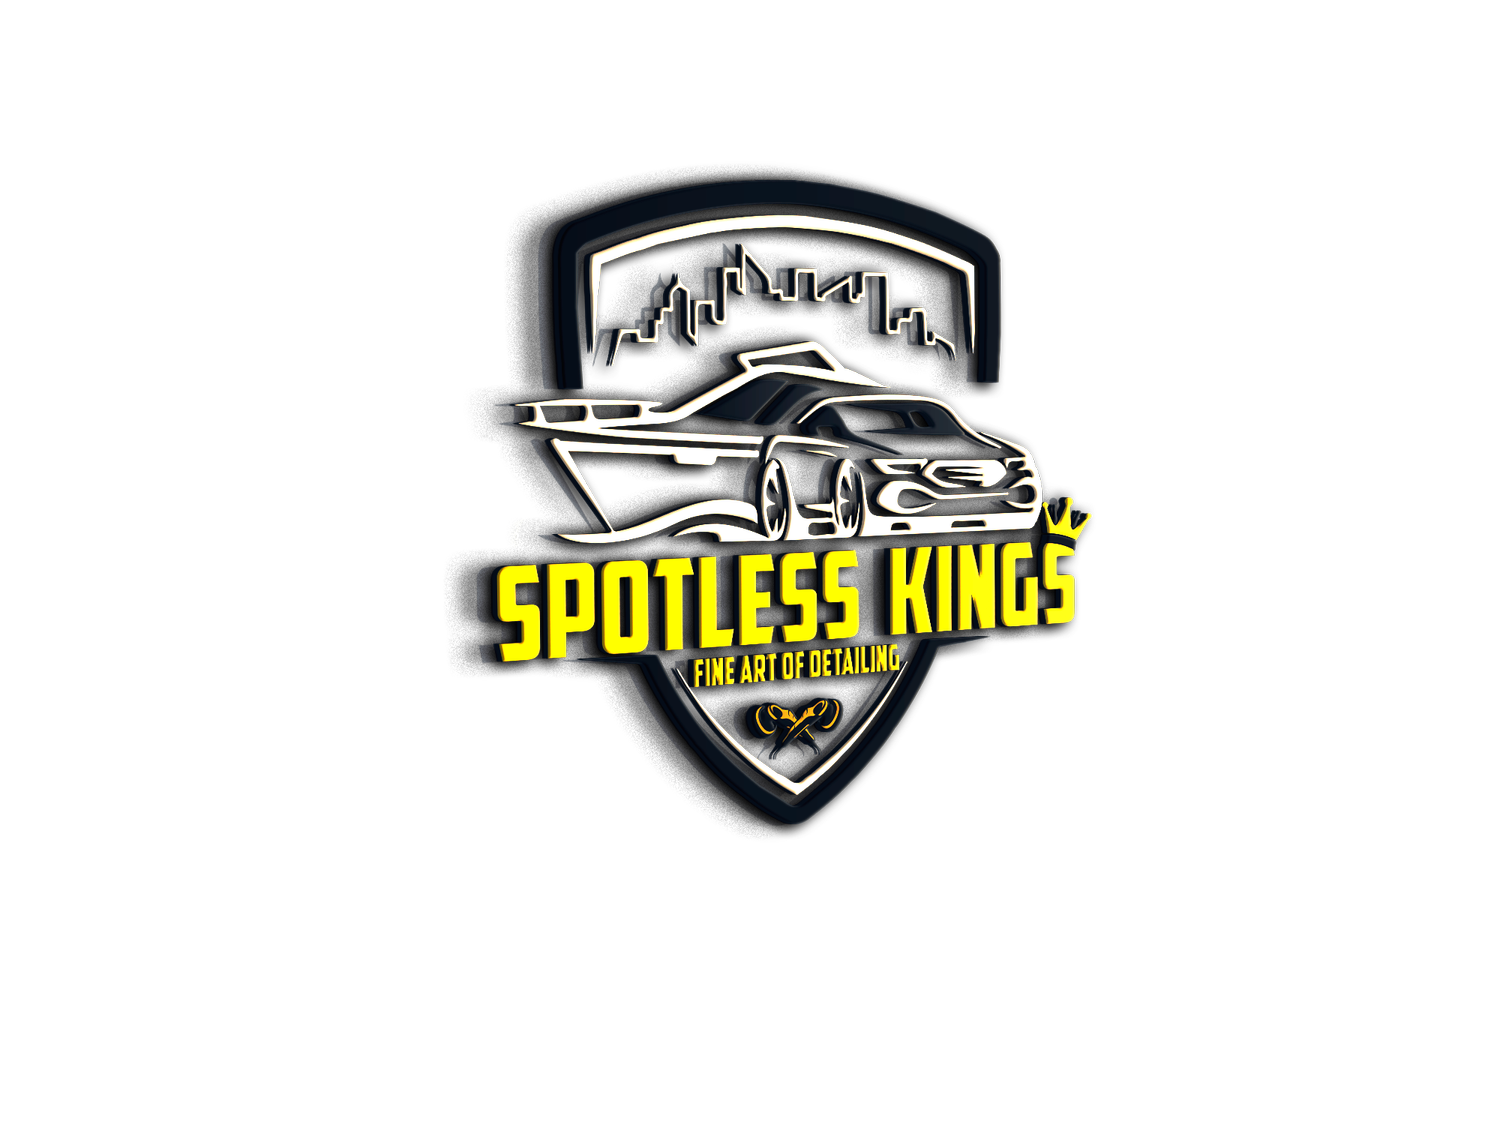 Spotless Kings